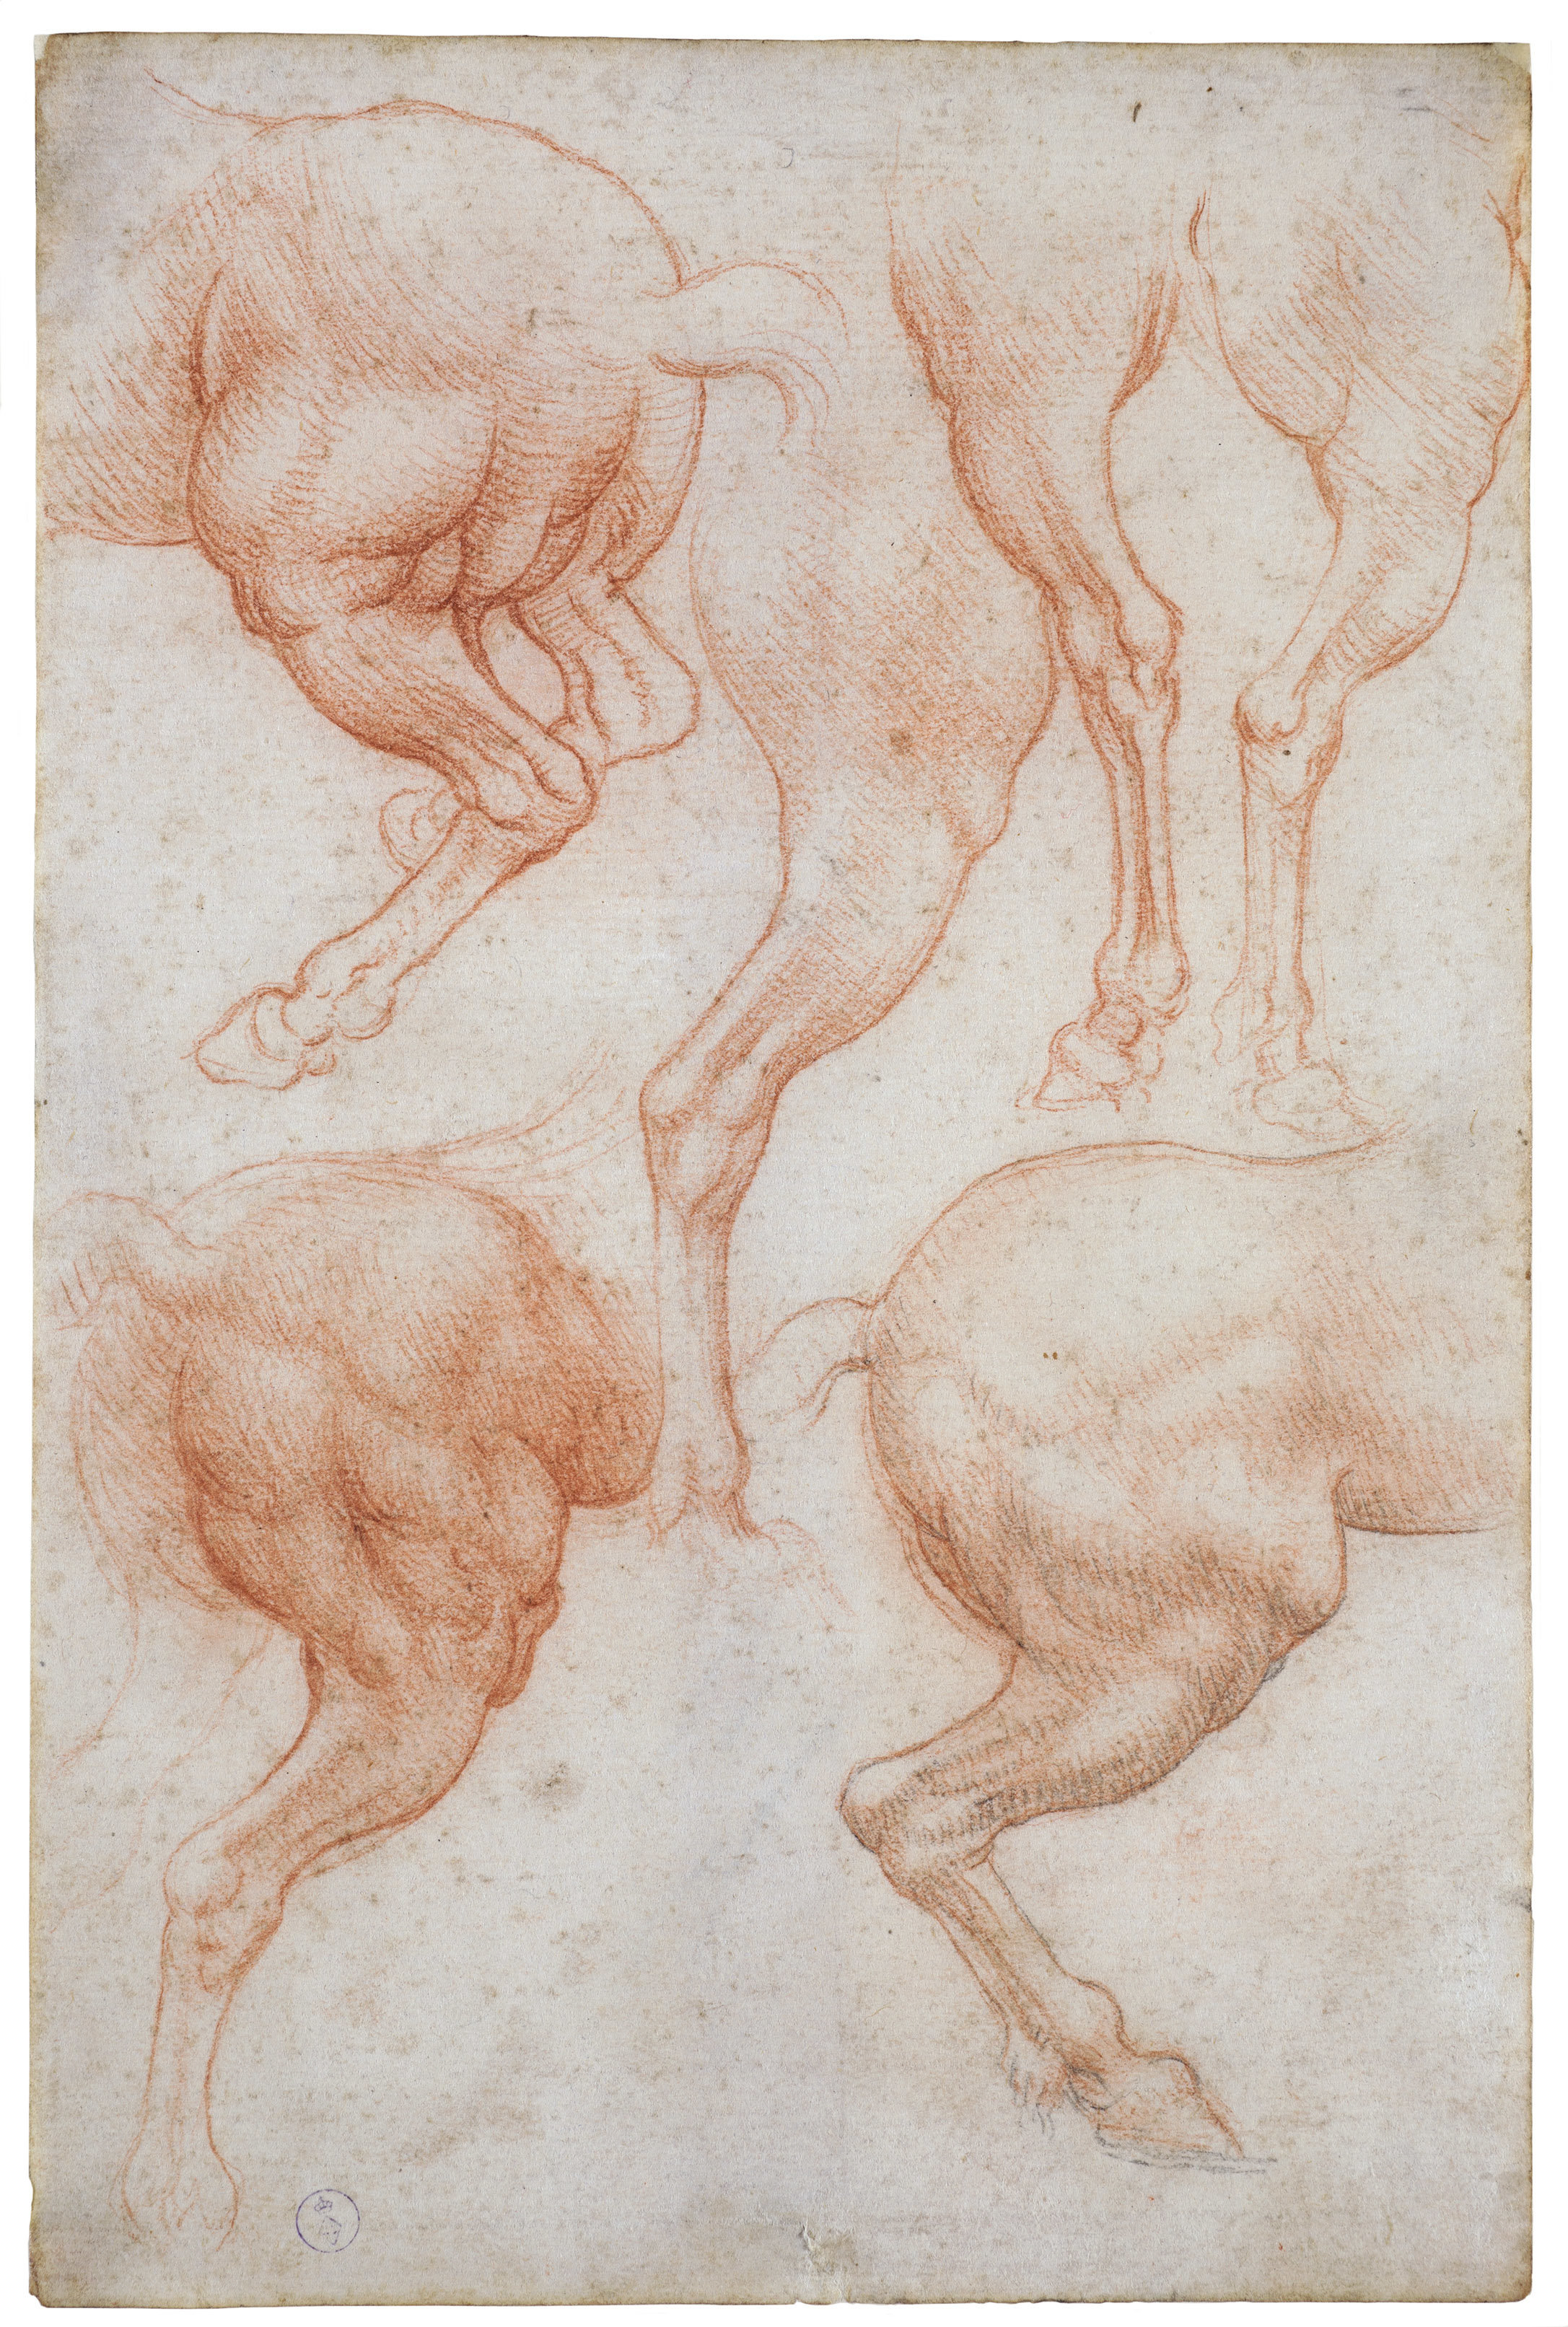 Леонардо да Винчи зарисовки лошадей